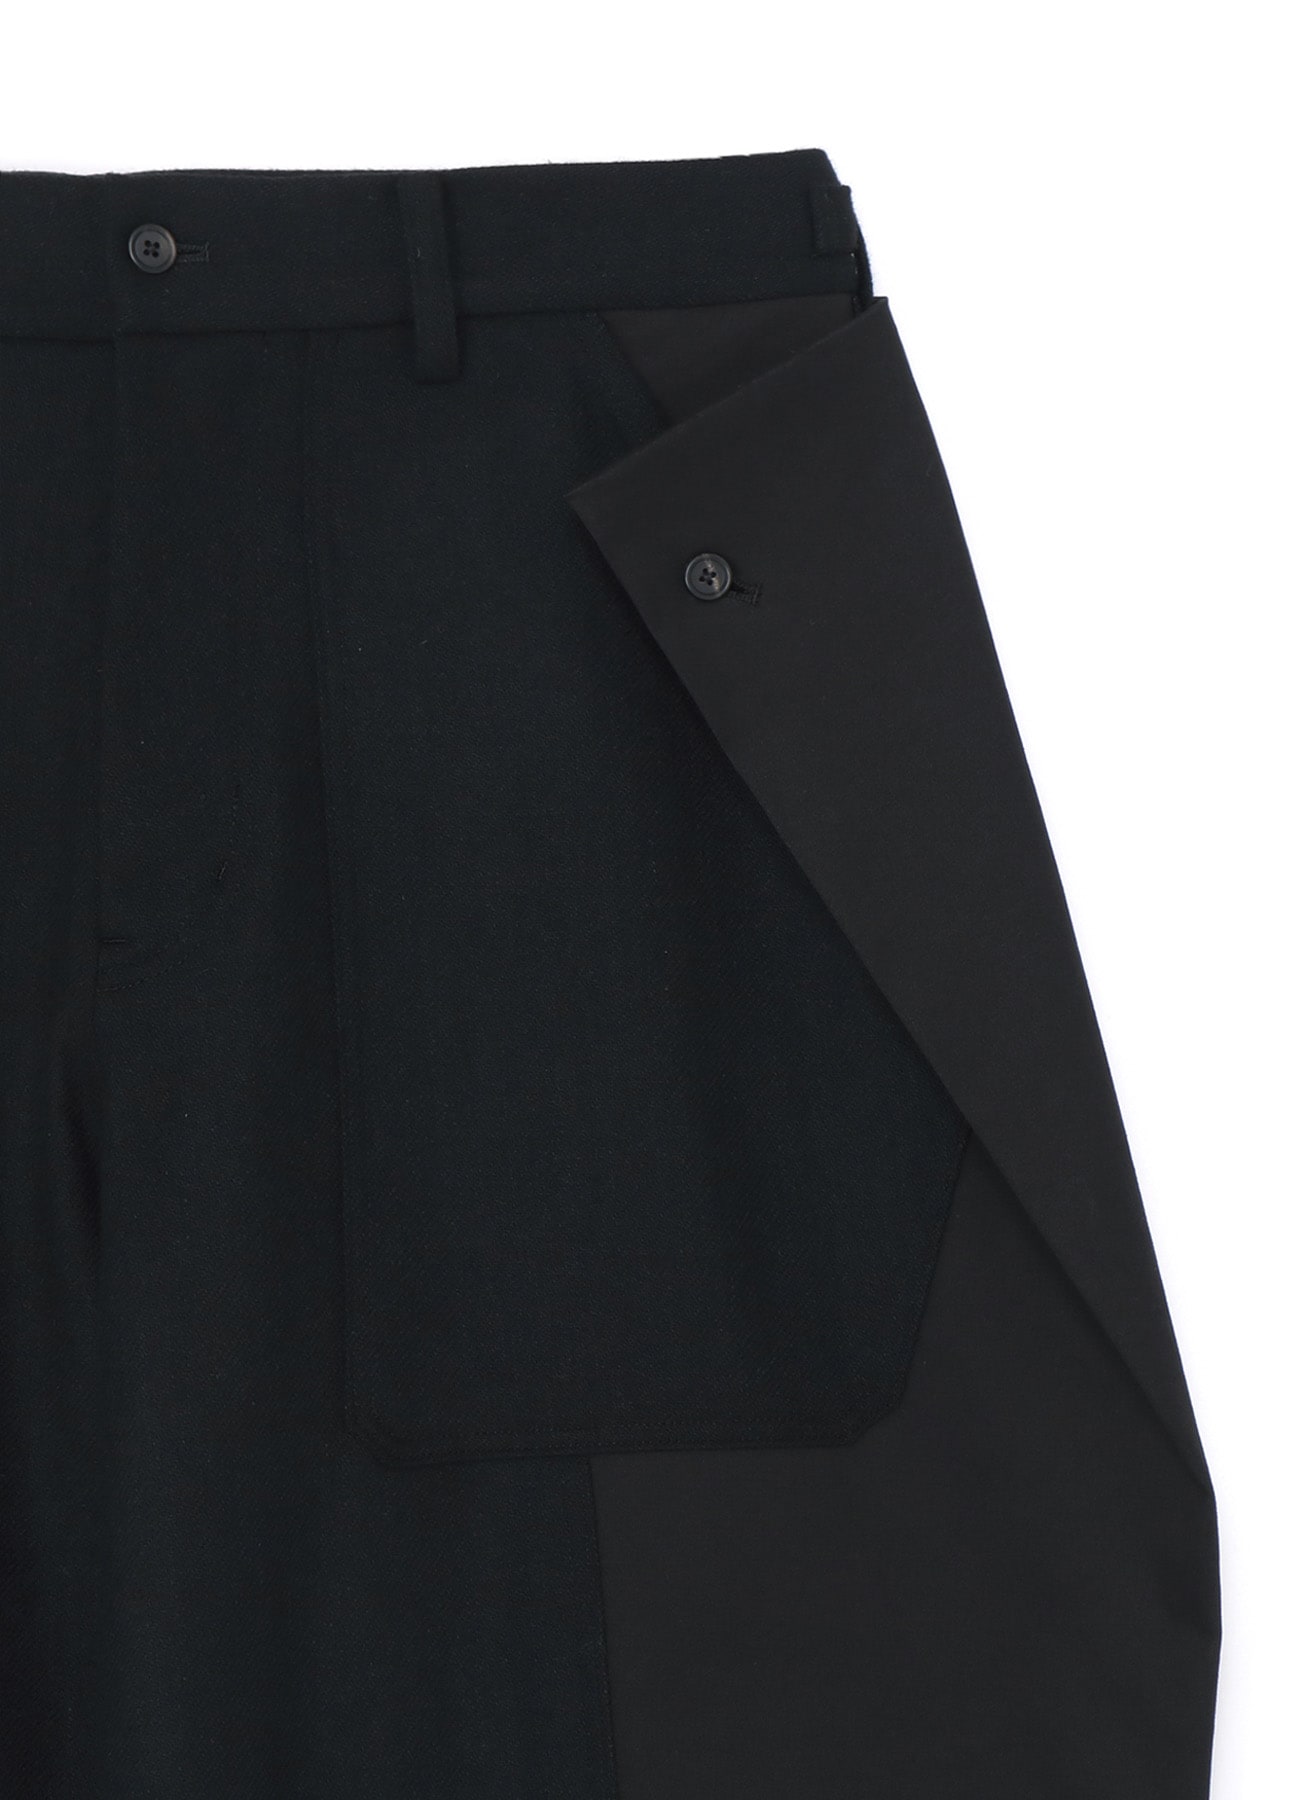 1/10 Flannel Waist Adjustable Vertical Joint Pants